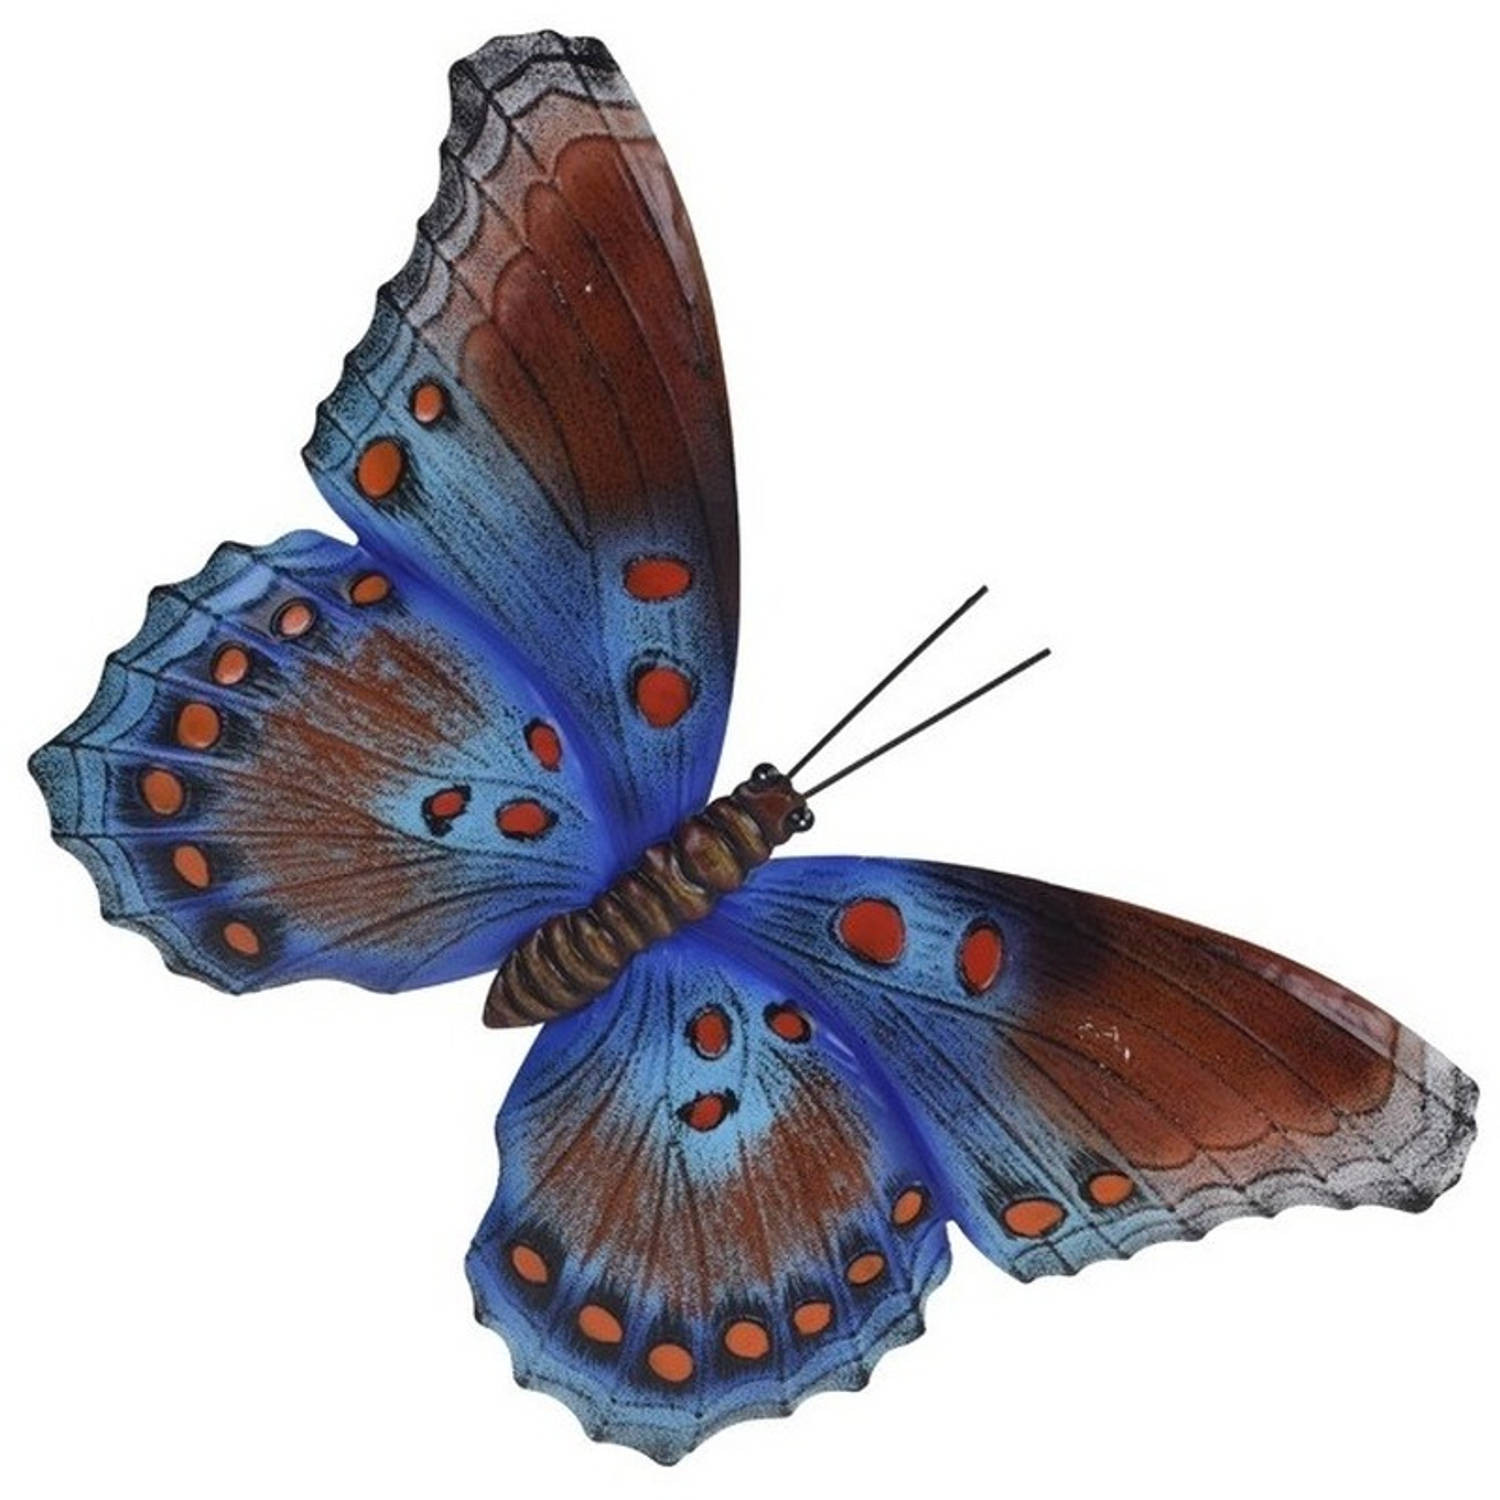 Tuindecoratie bruin/blauwe vlinder 44 cm - Tuinbeelden